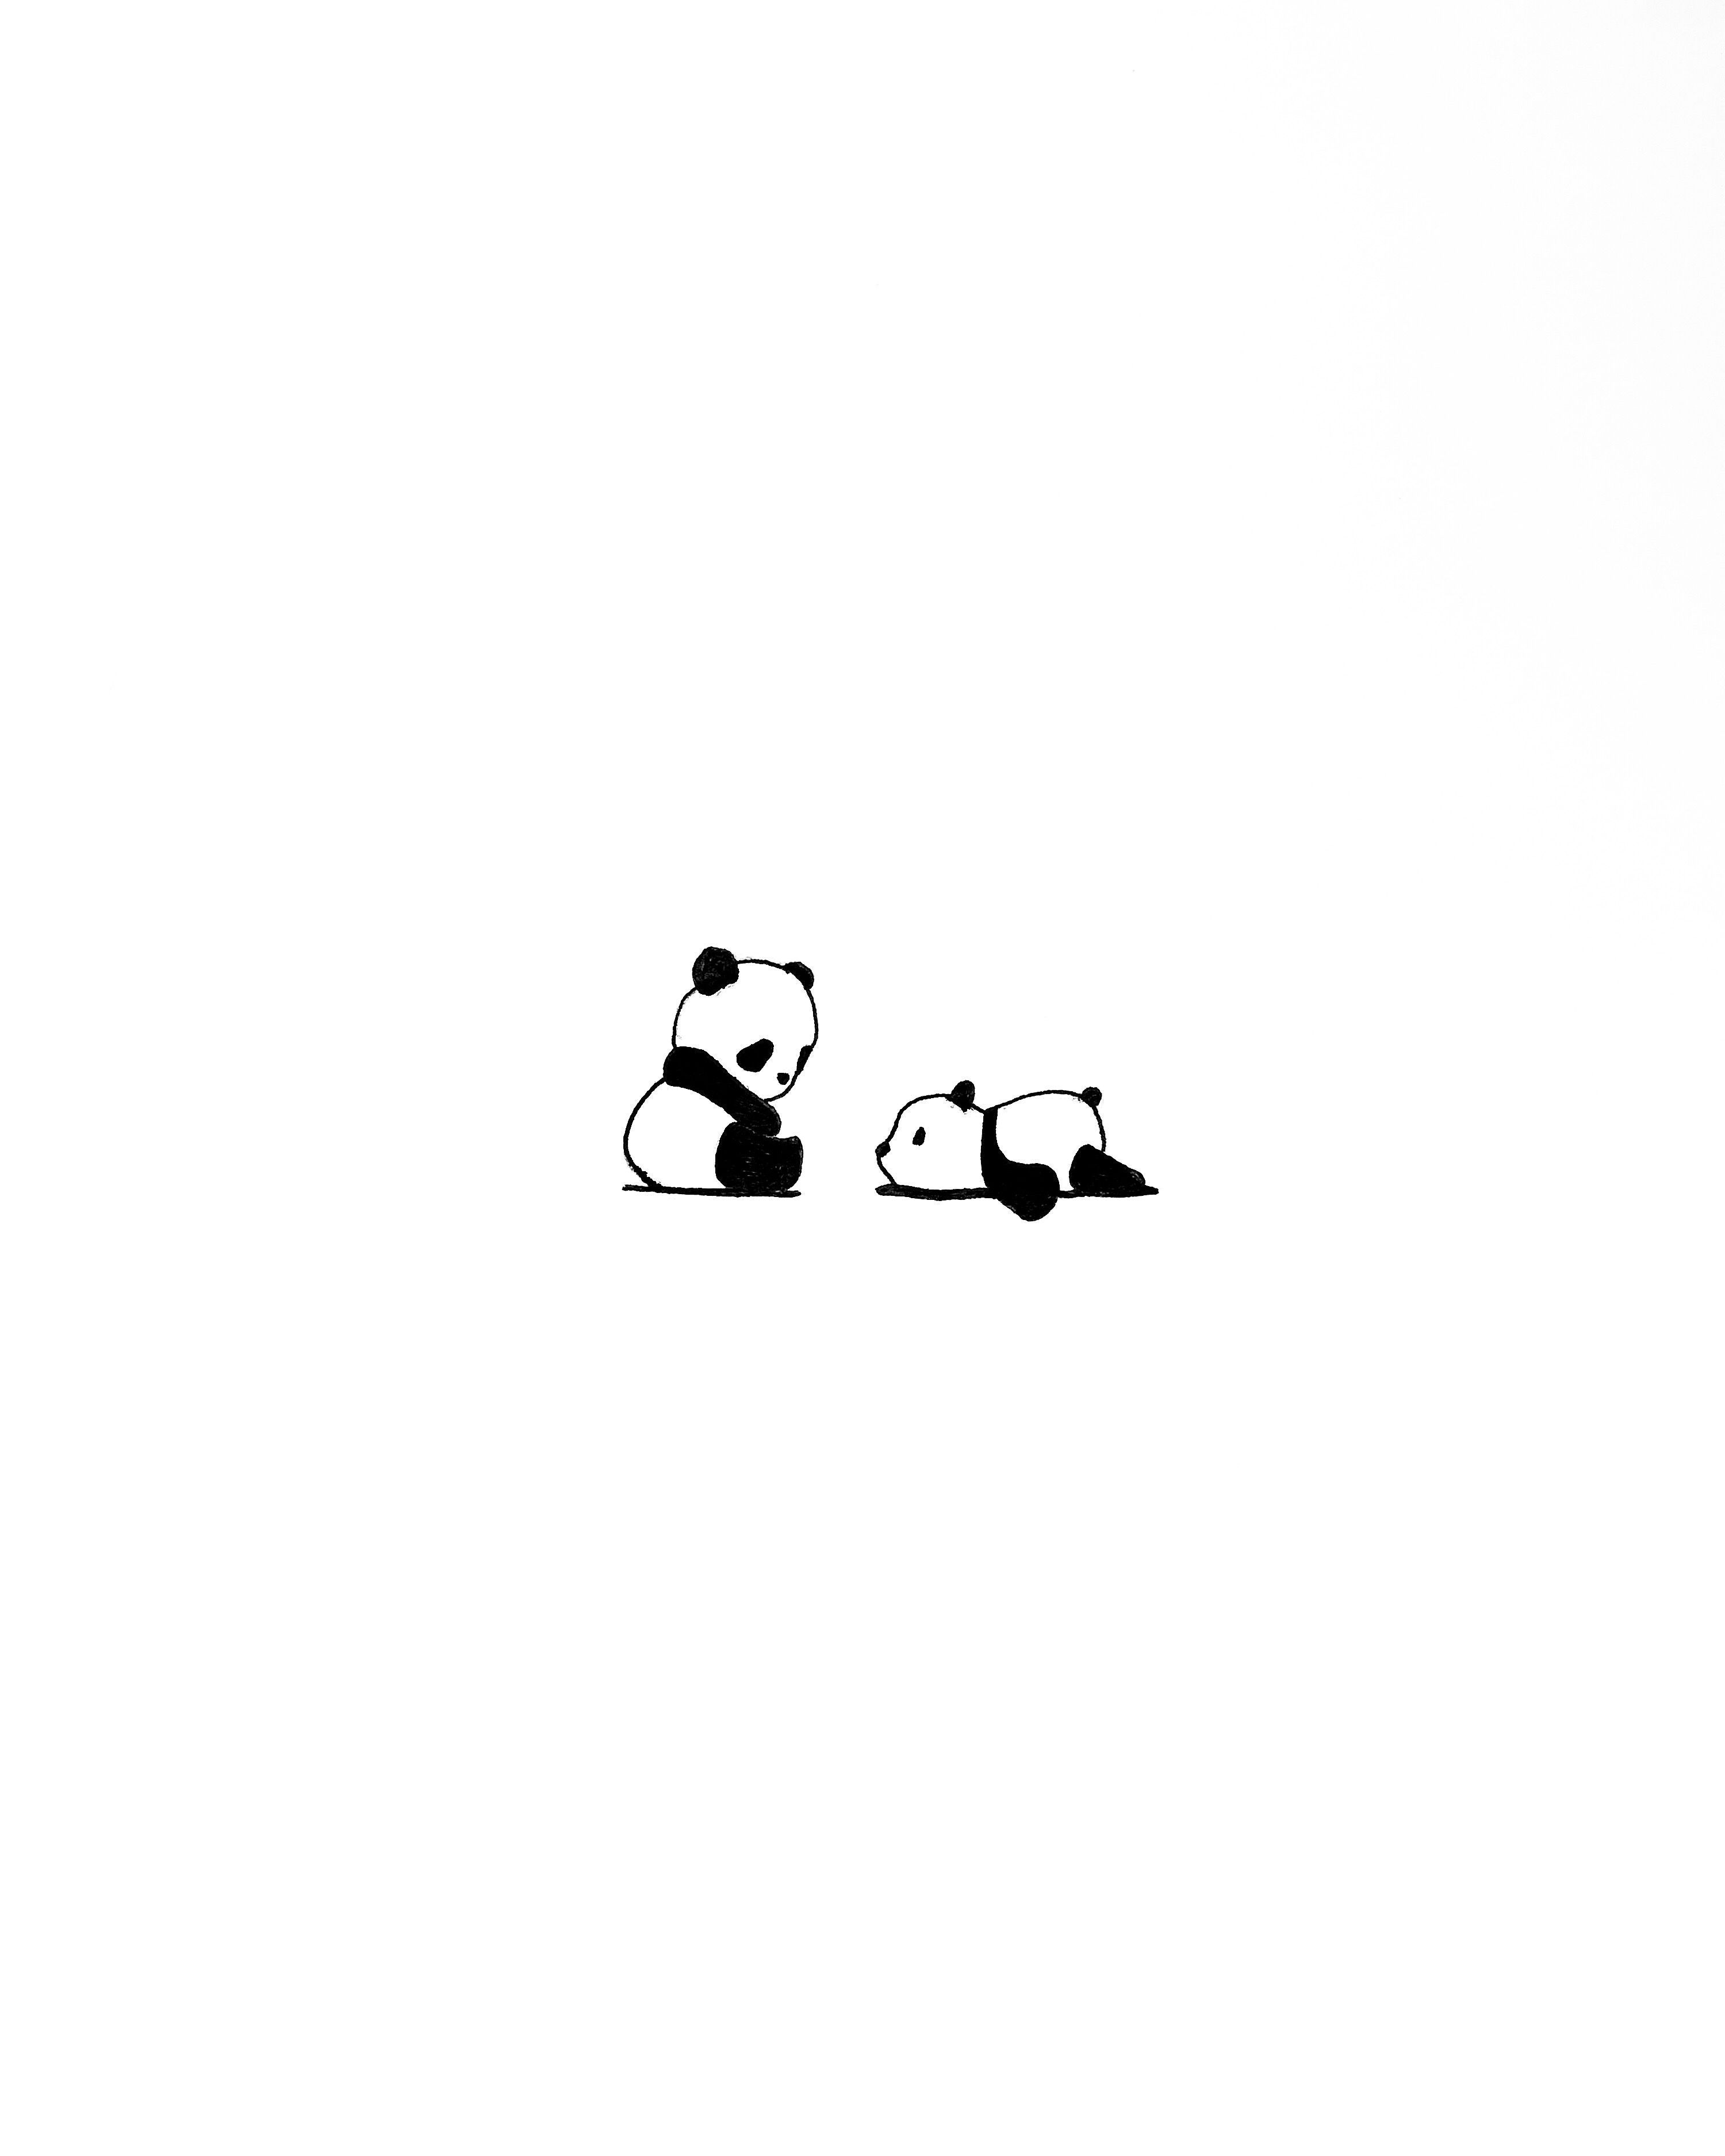 A black and white panda illustration - Panda